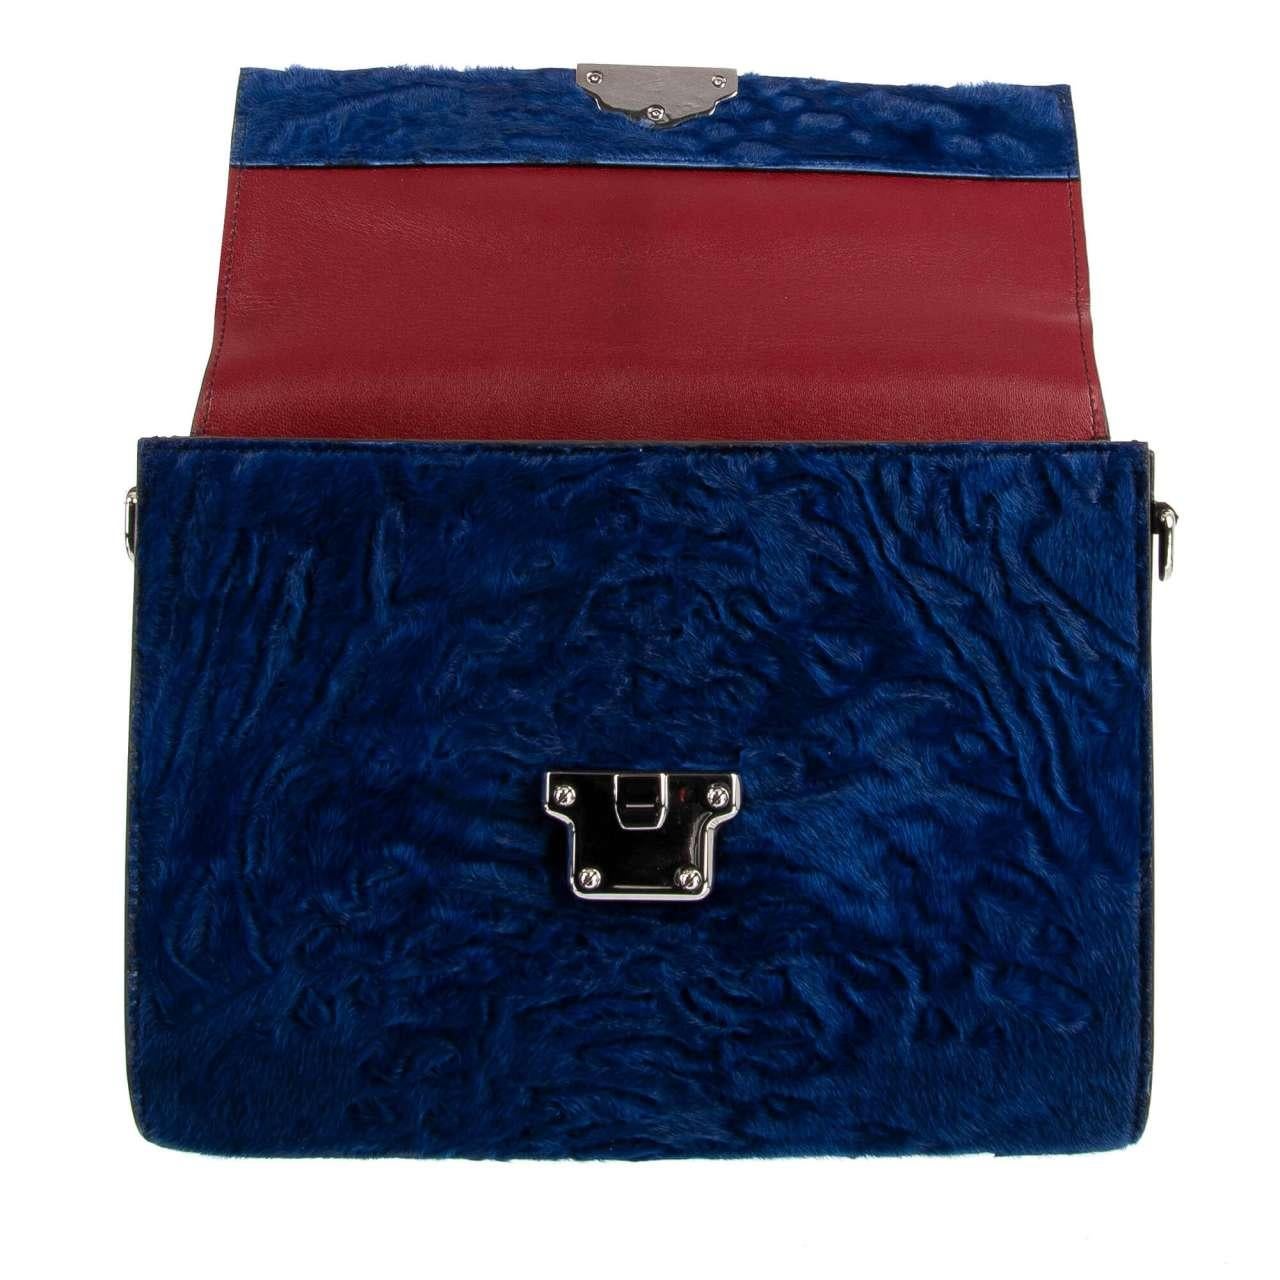 Dolce & Gabbana - Astrakan Fur LUCIA Bag Blue Black In Excellent Condition For Sale In Erkrath, DE